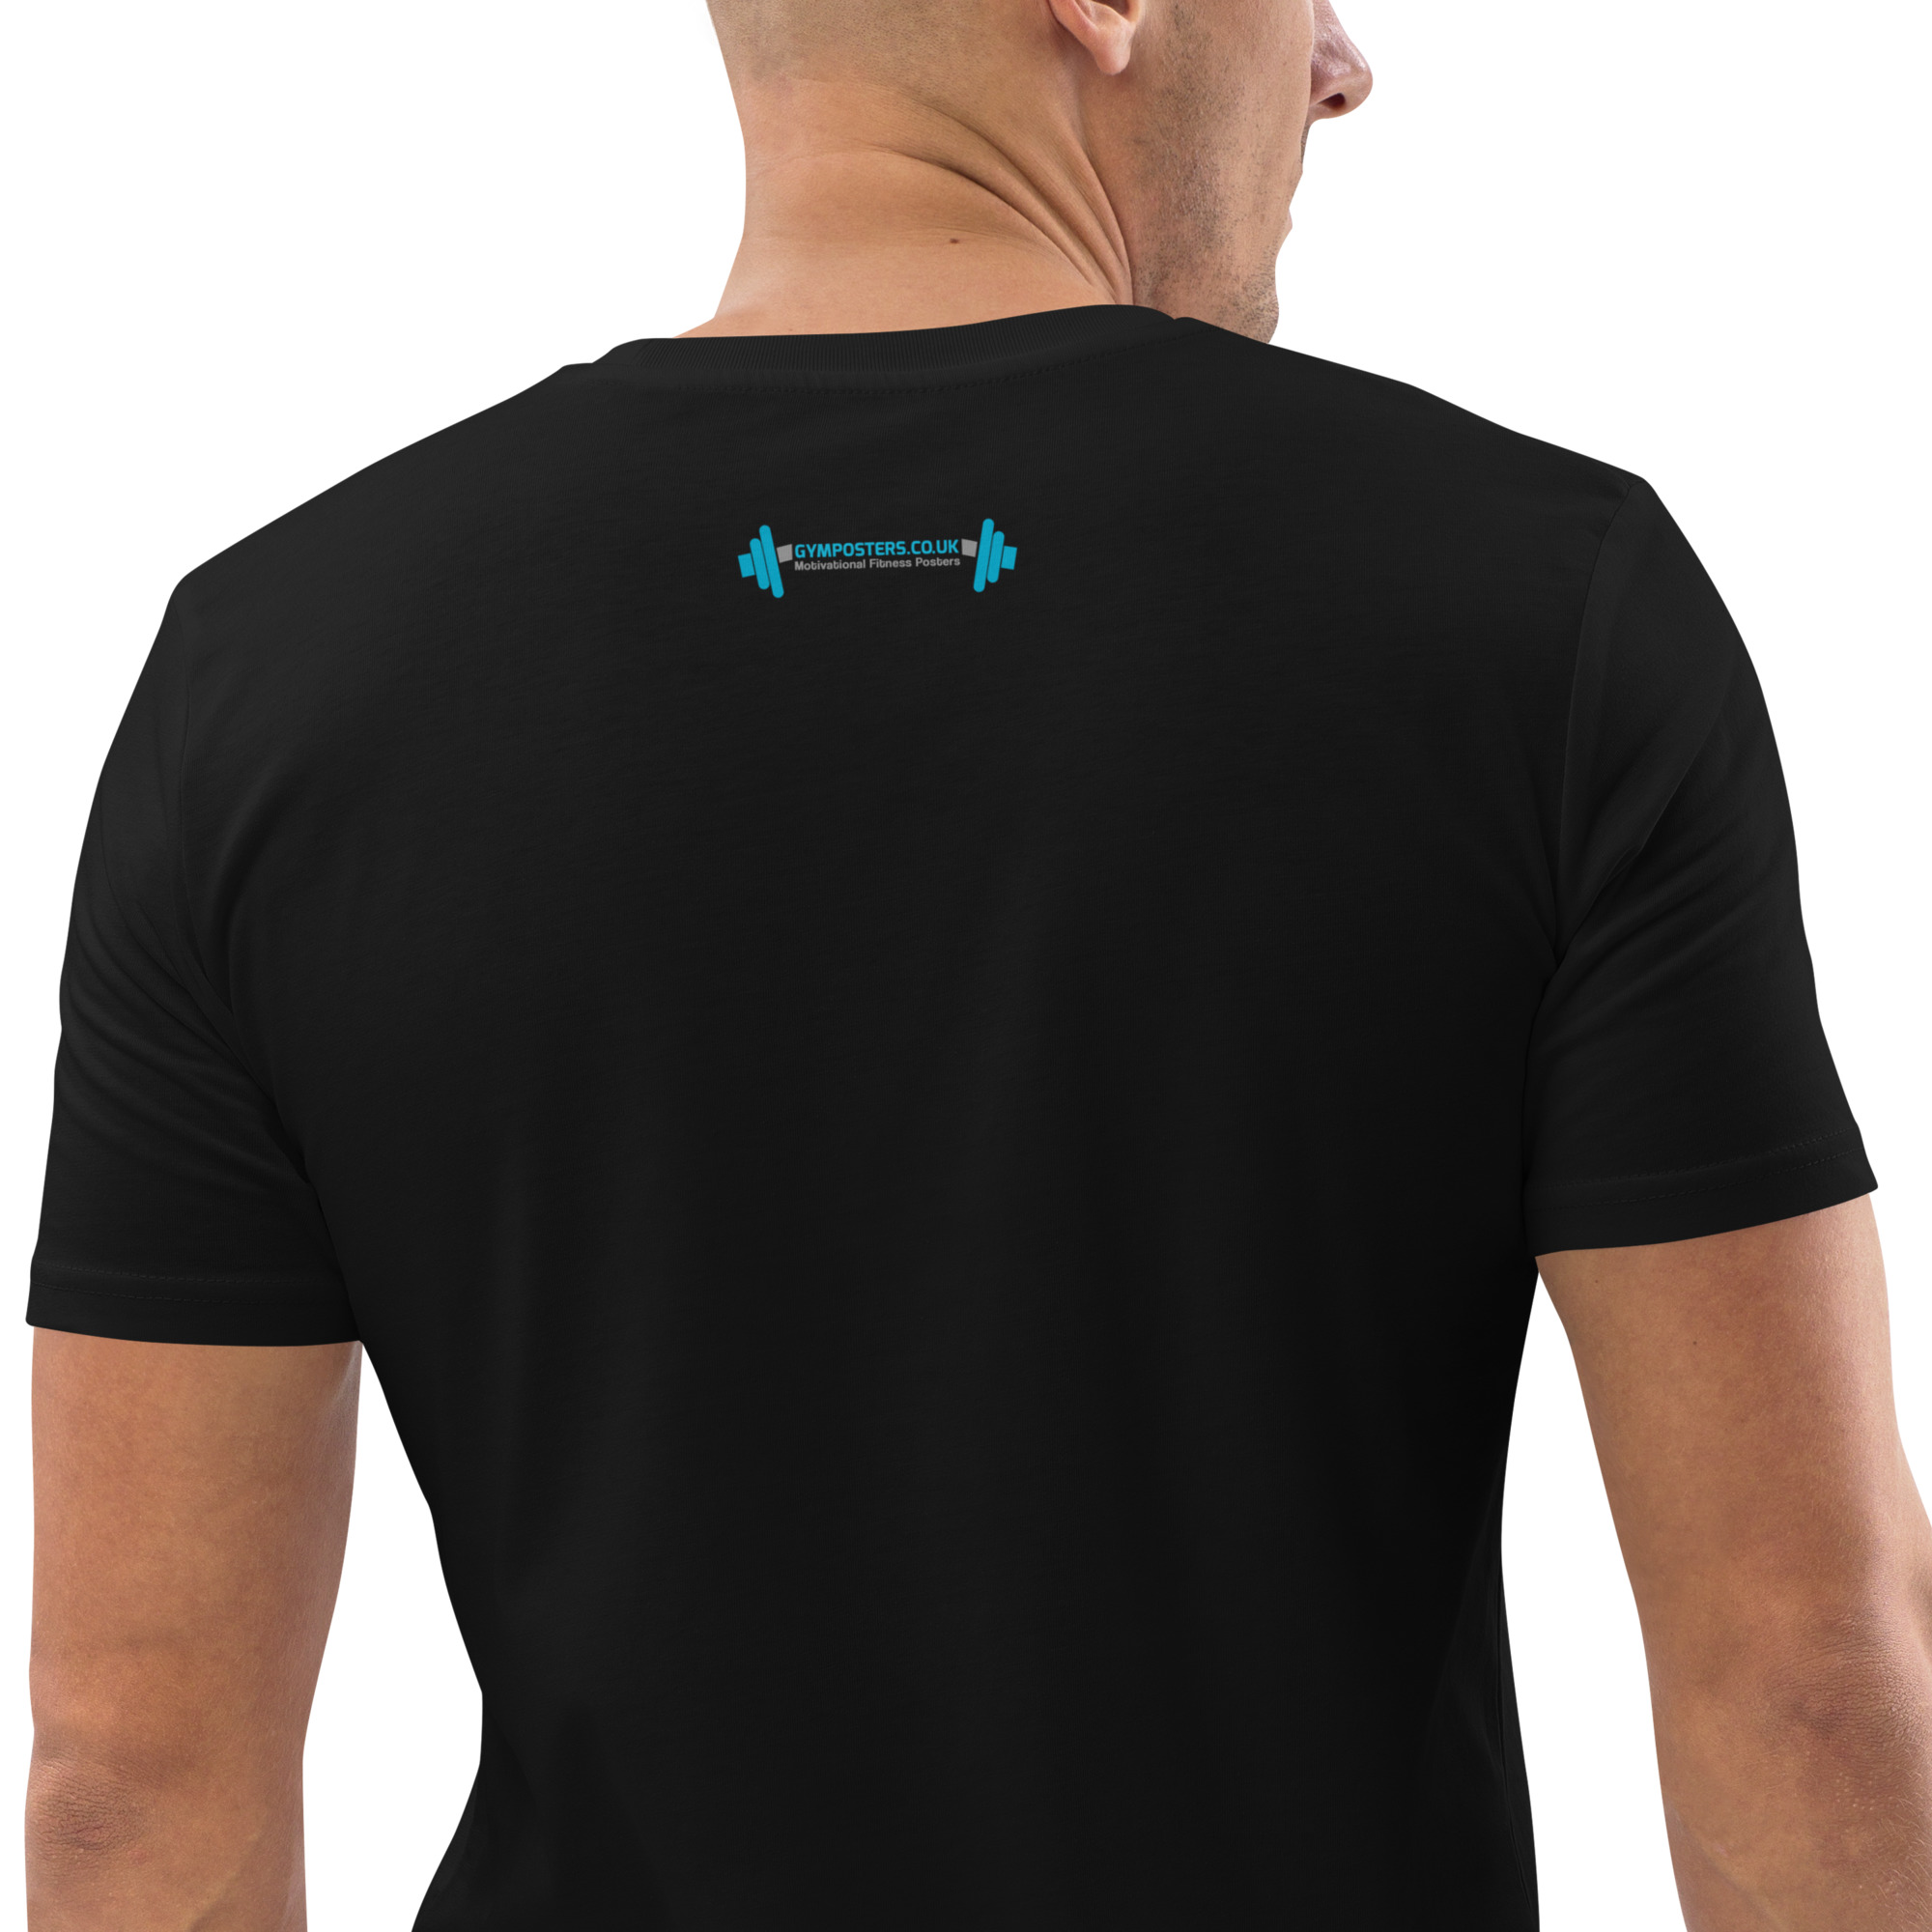 unisex-organic-cotton-t-shirt-black-zoomed-in-6578572d36153.jpg